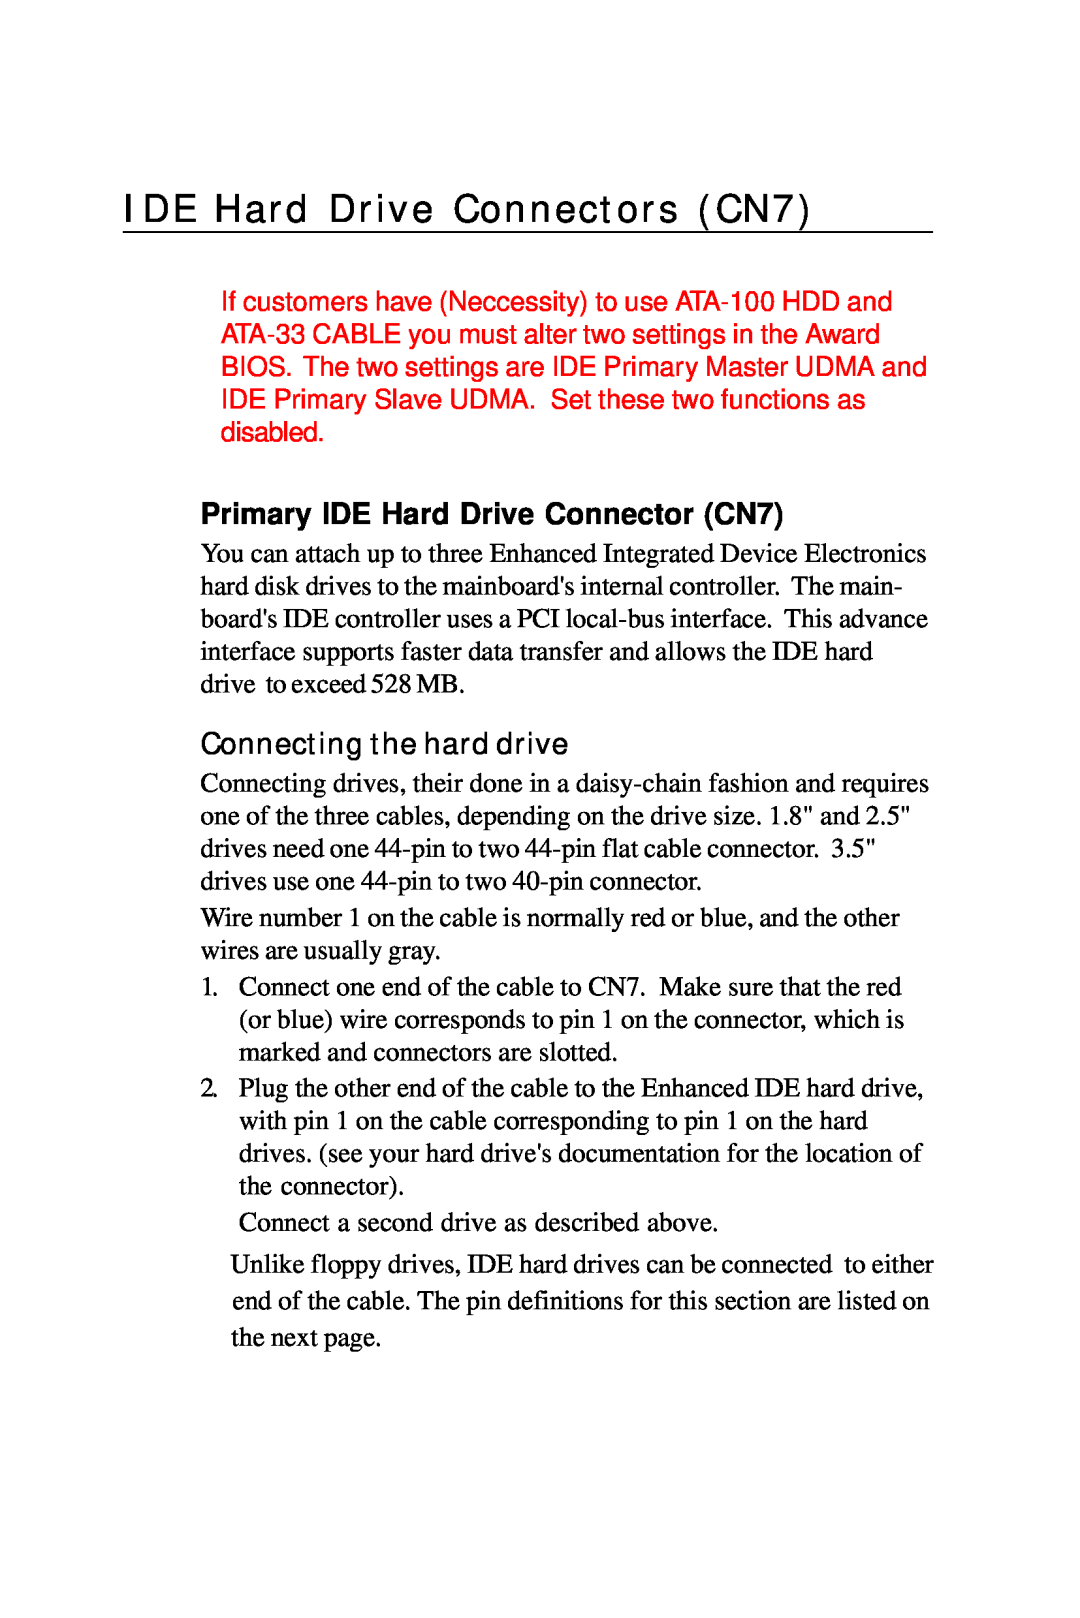 Intel PCM-6896 manual IDE Hard Drive Connectors CN7, Primary IDE Hard Drive Connector CN7, Connecting the hard drive 